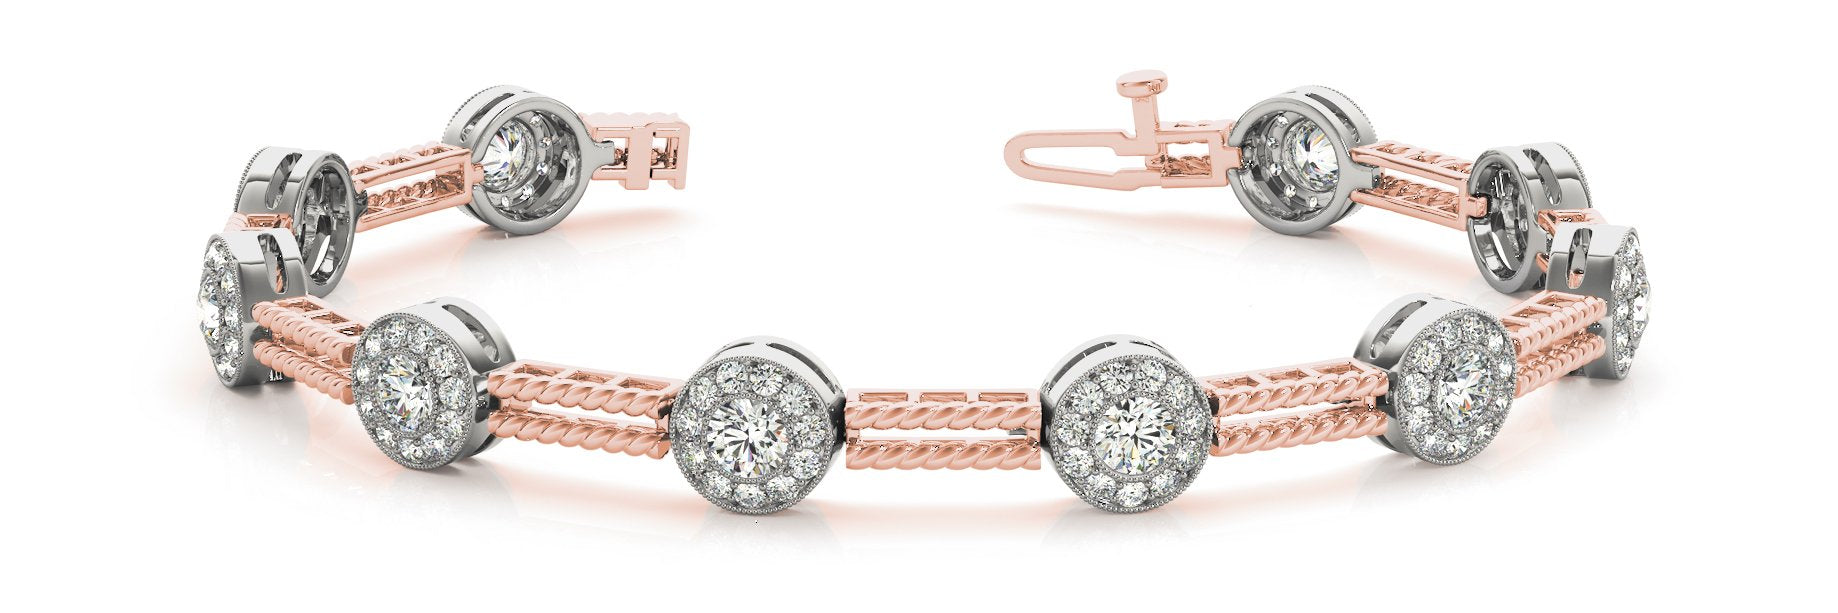 Fancy Diamond Bracelet Ladies 2.67ct tw - 14kt Gold